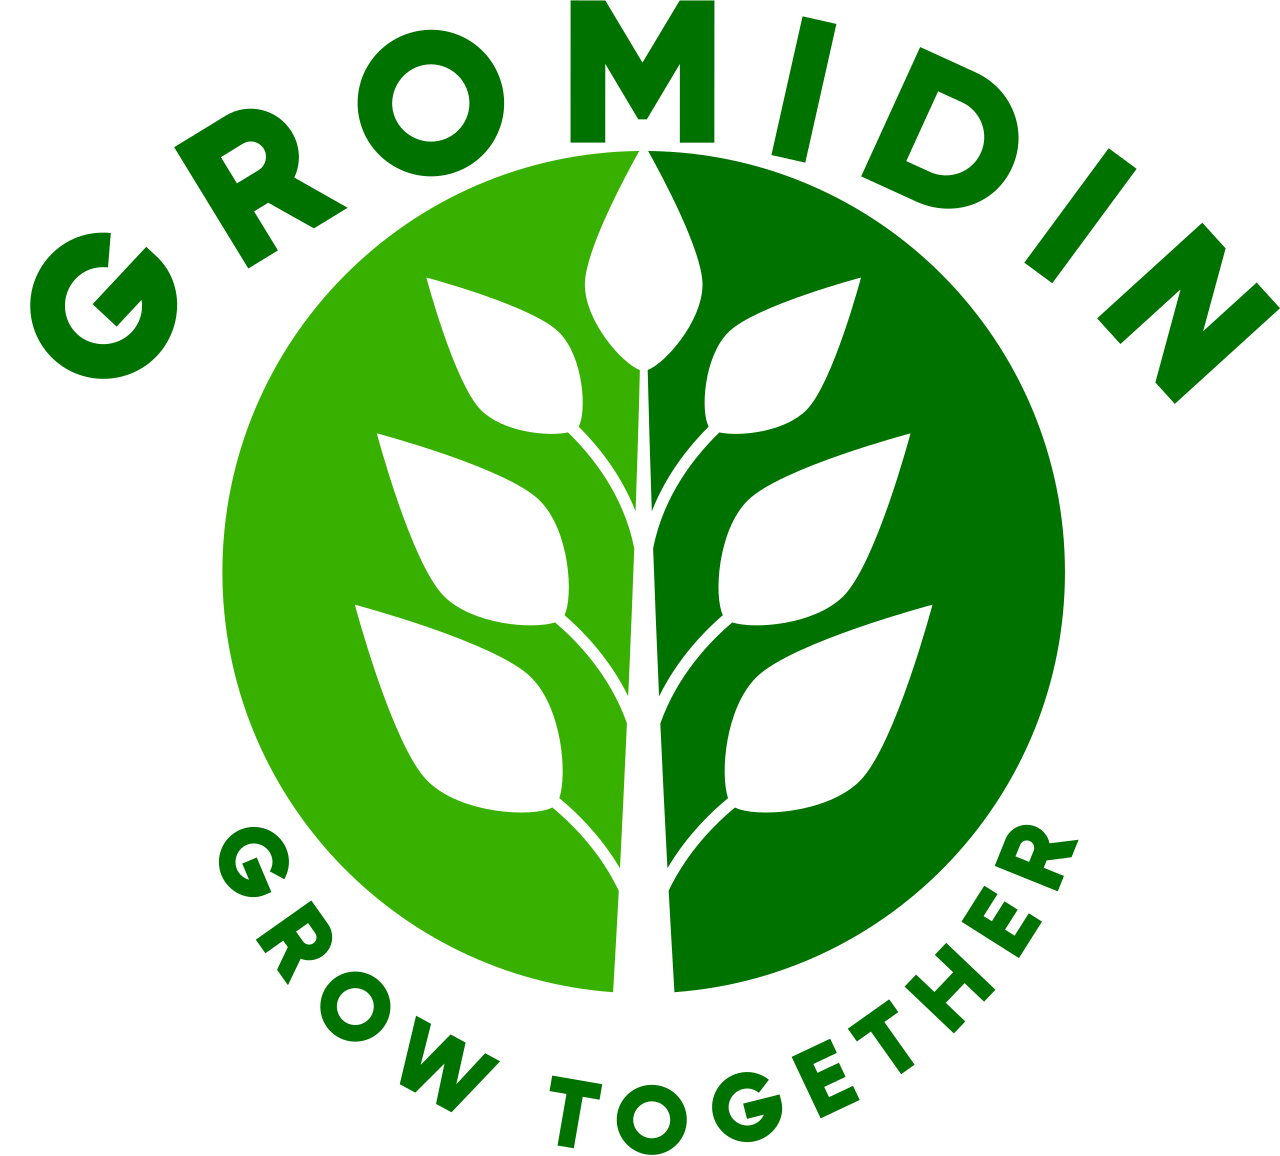 Gromidin's logo